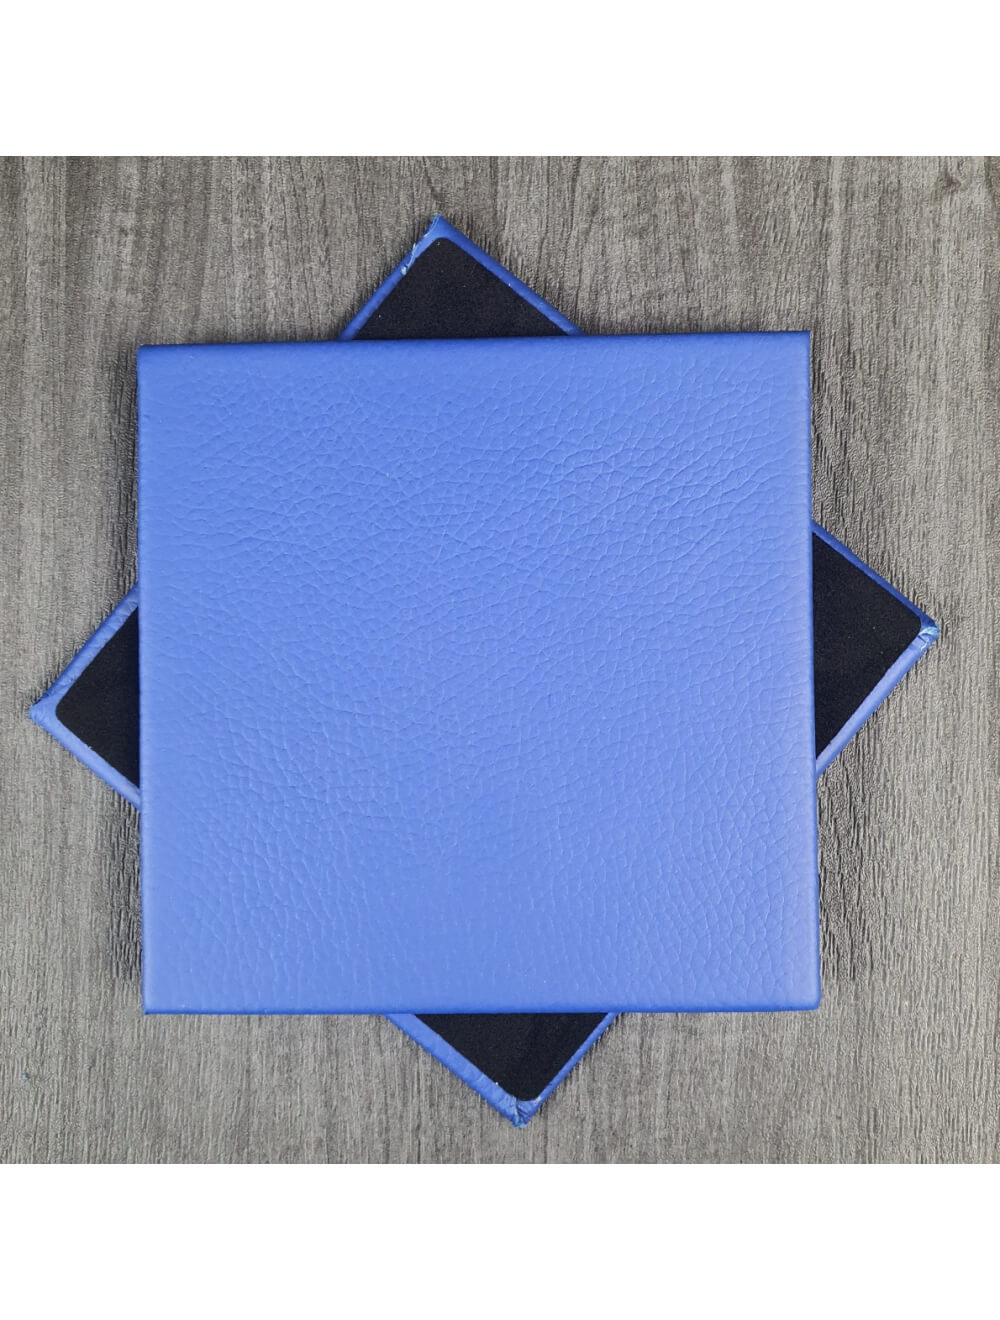 Djup Ultramarine Shelly Leather Coaster- 10cm SQ (Sale Item)